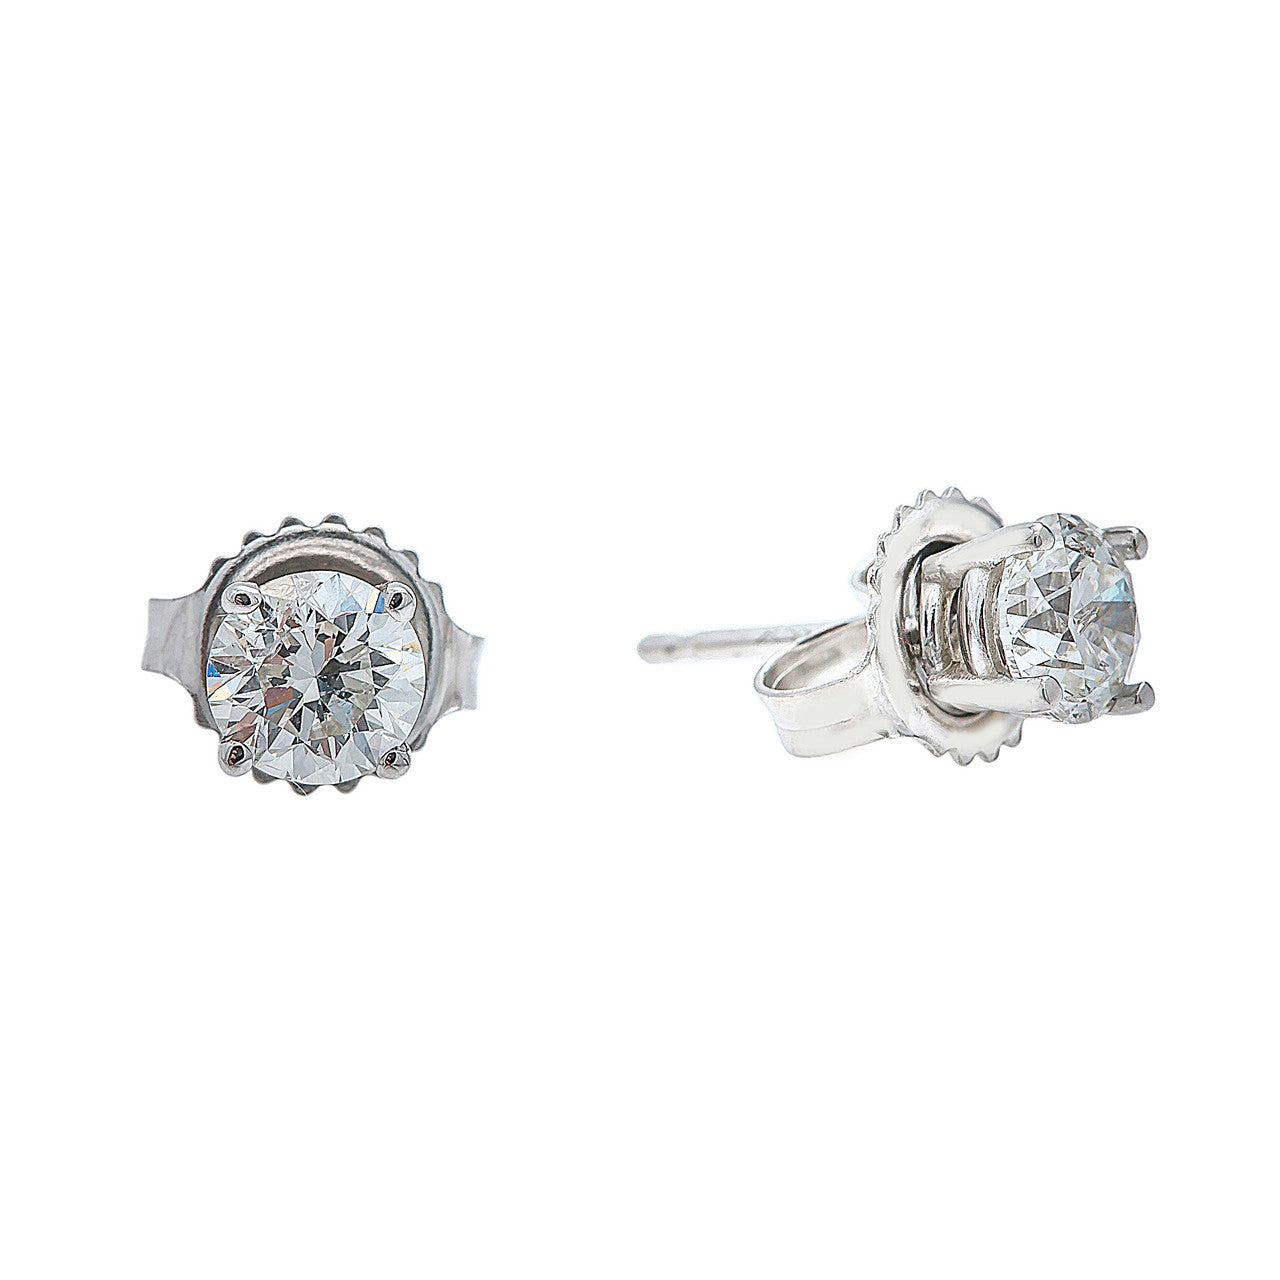 6.11 Carat Old European Cut Diamond Earrings | Pampillonia Jewelers |  Estate and Designer Jewelry